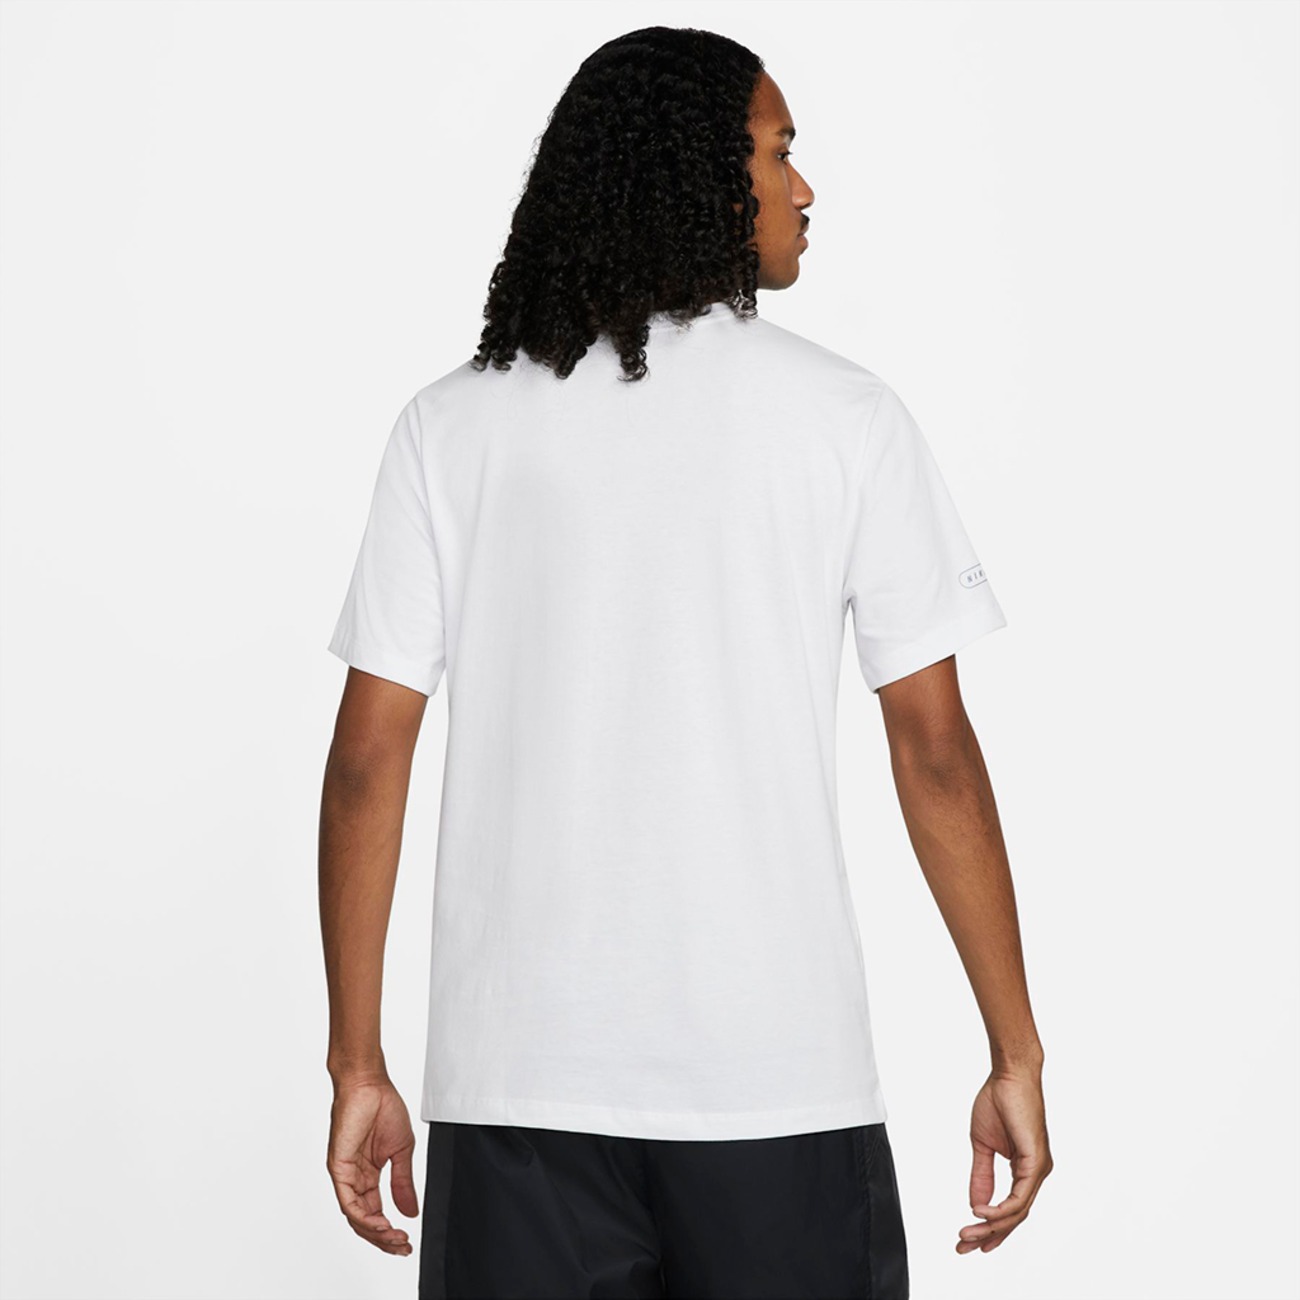 Camiseta Nike Air Masculina - Foto 2